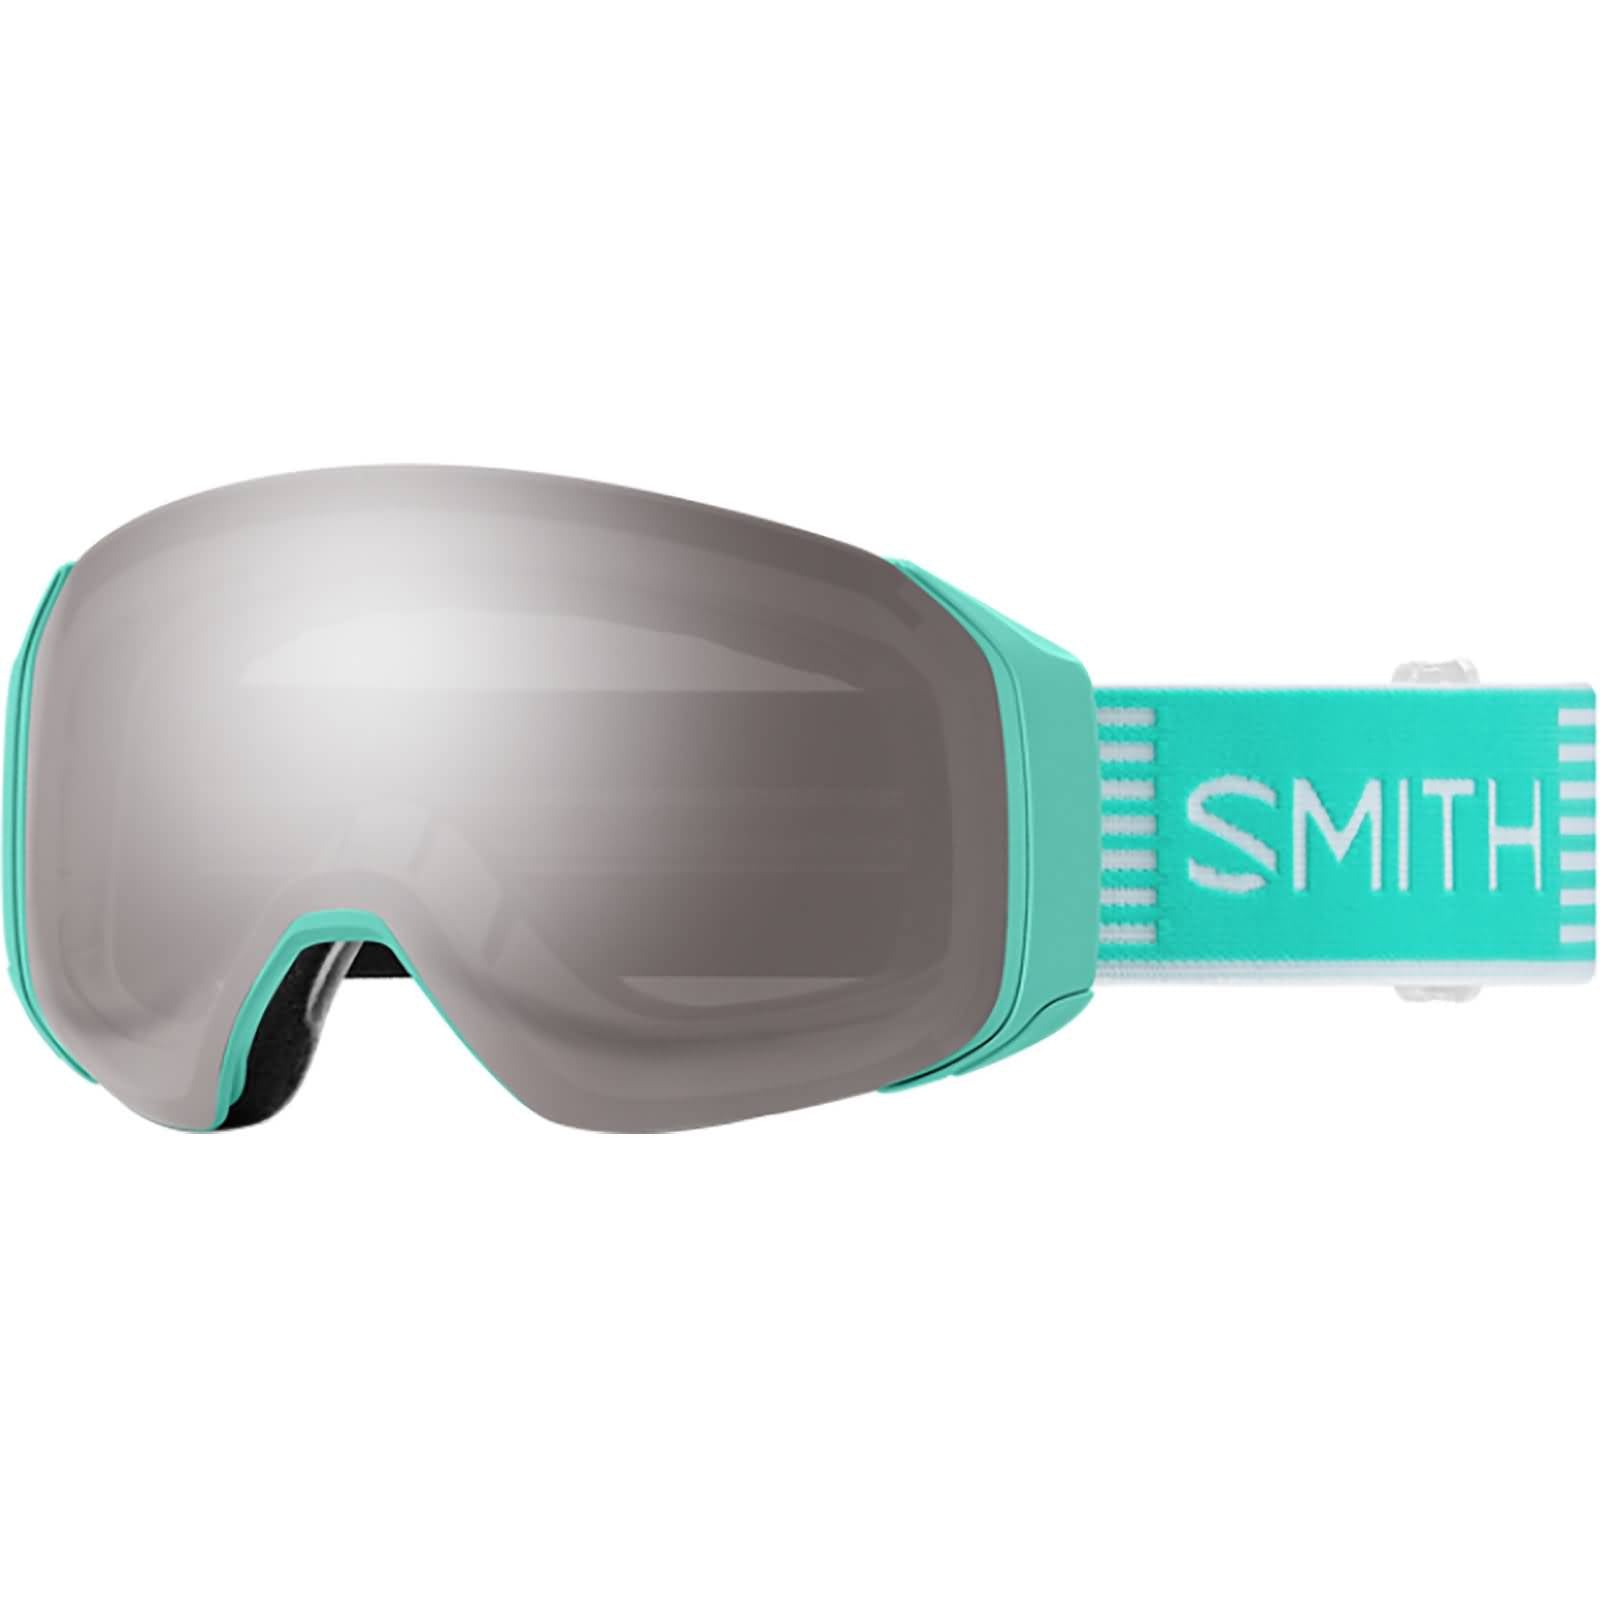 Smith Optics 4D MAG S Women's Snow Goggles-M007600MS995T